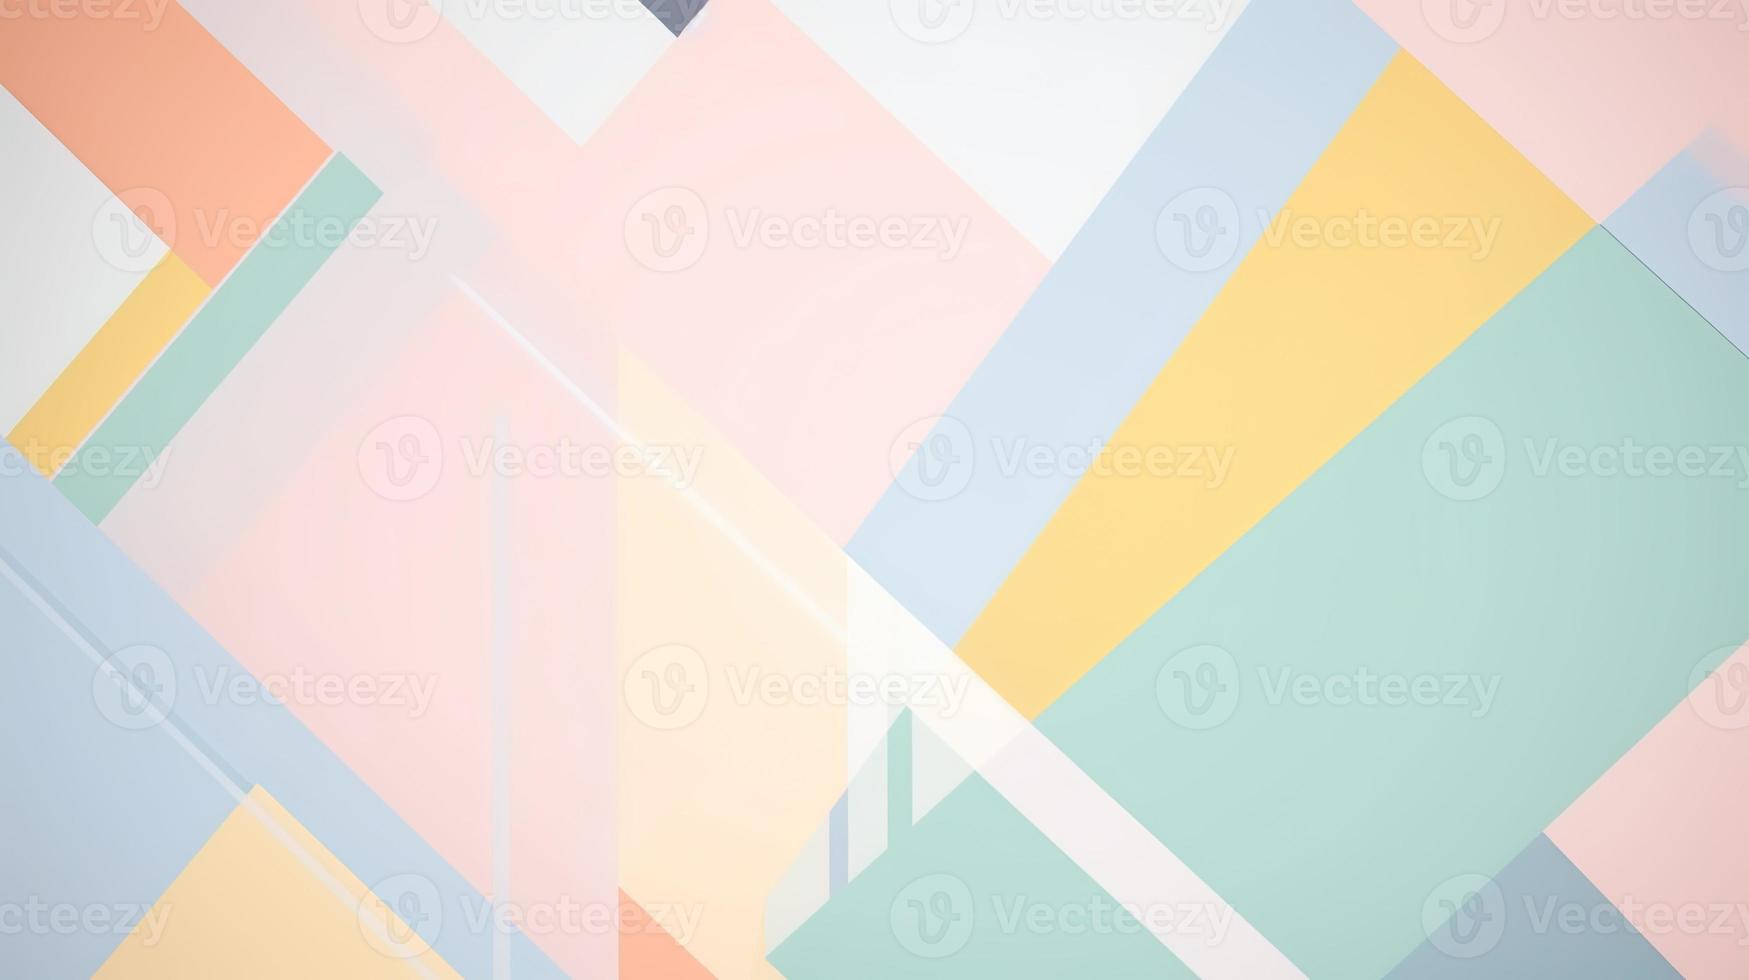 abstract meetkundig achtergrond. minimalistisch ontwerp. pastel kleuren. foto